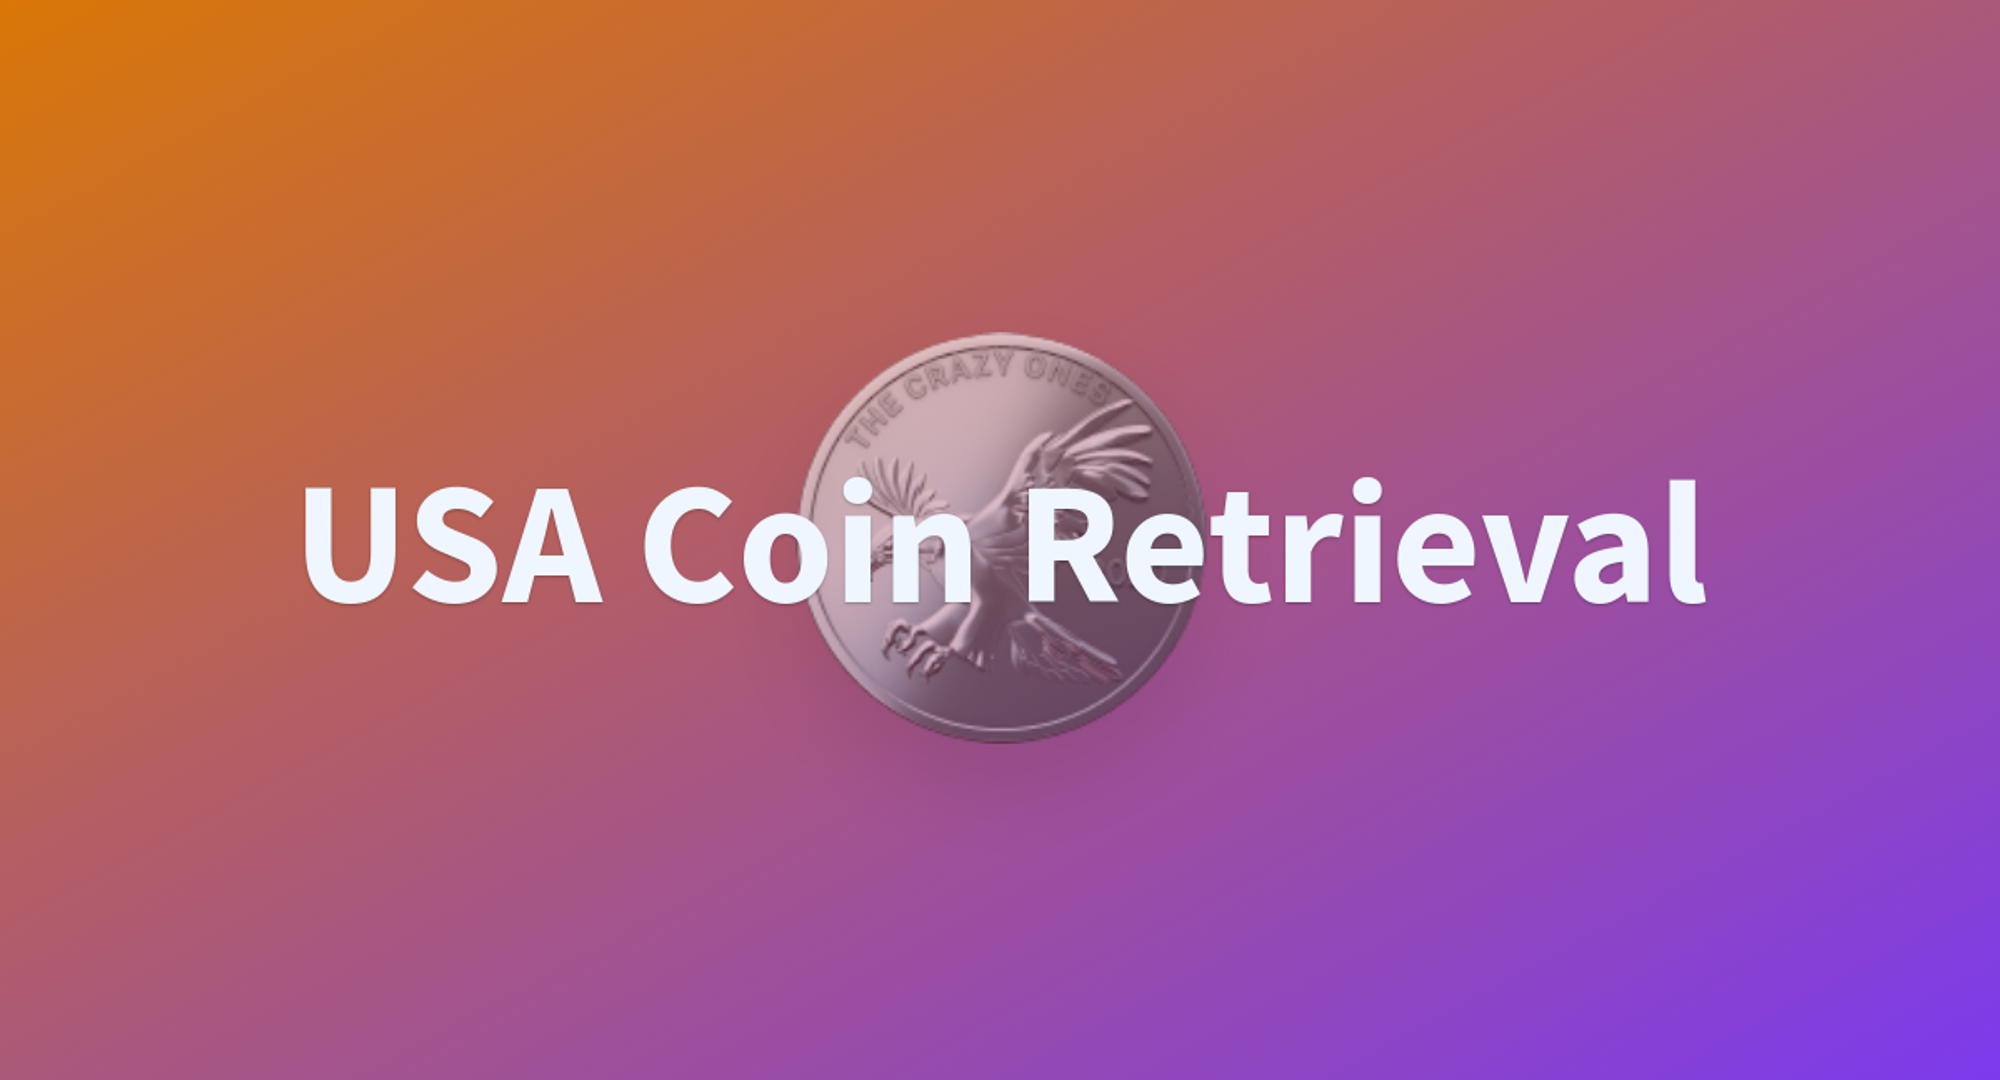 USA Coin Retrieval - a Hugging Face Space by breezedeus